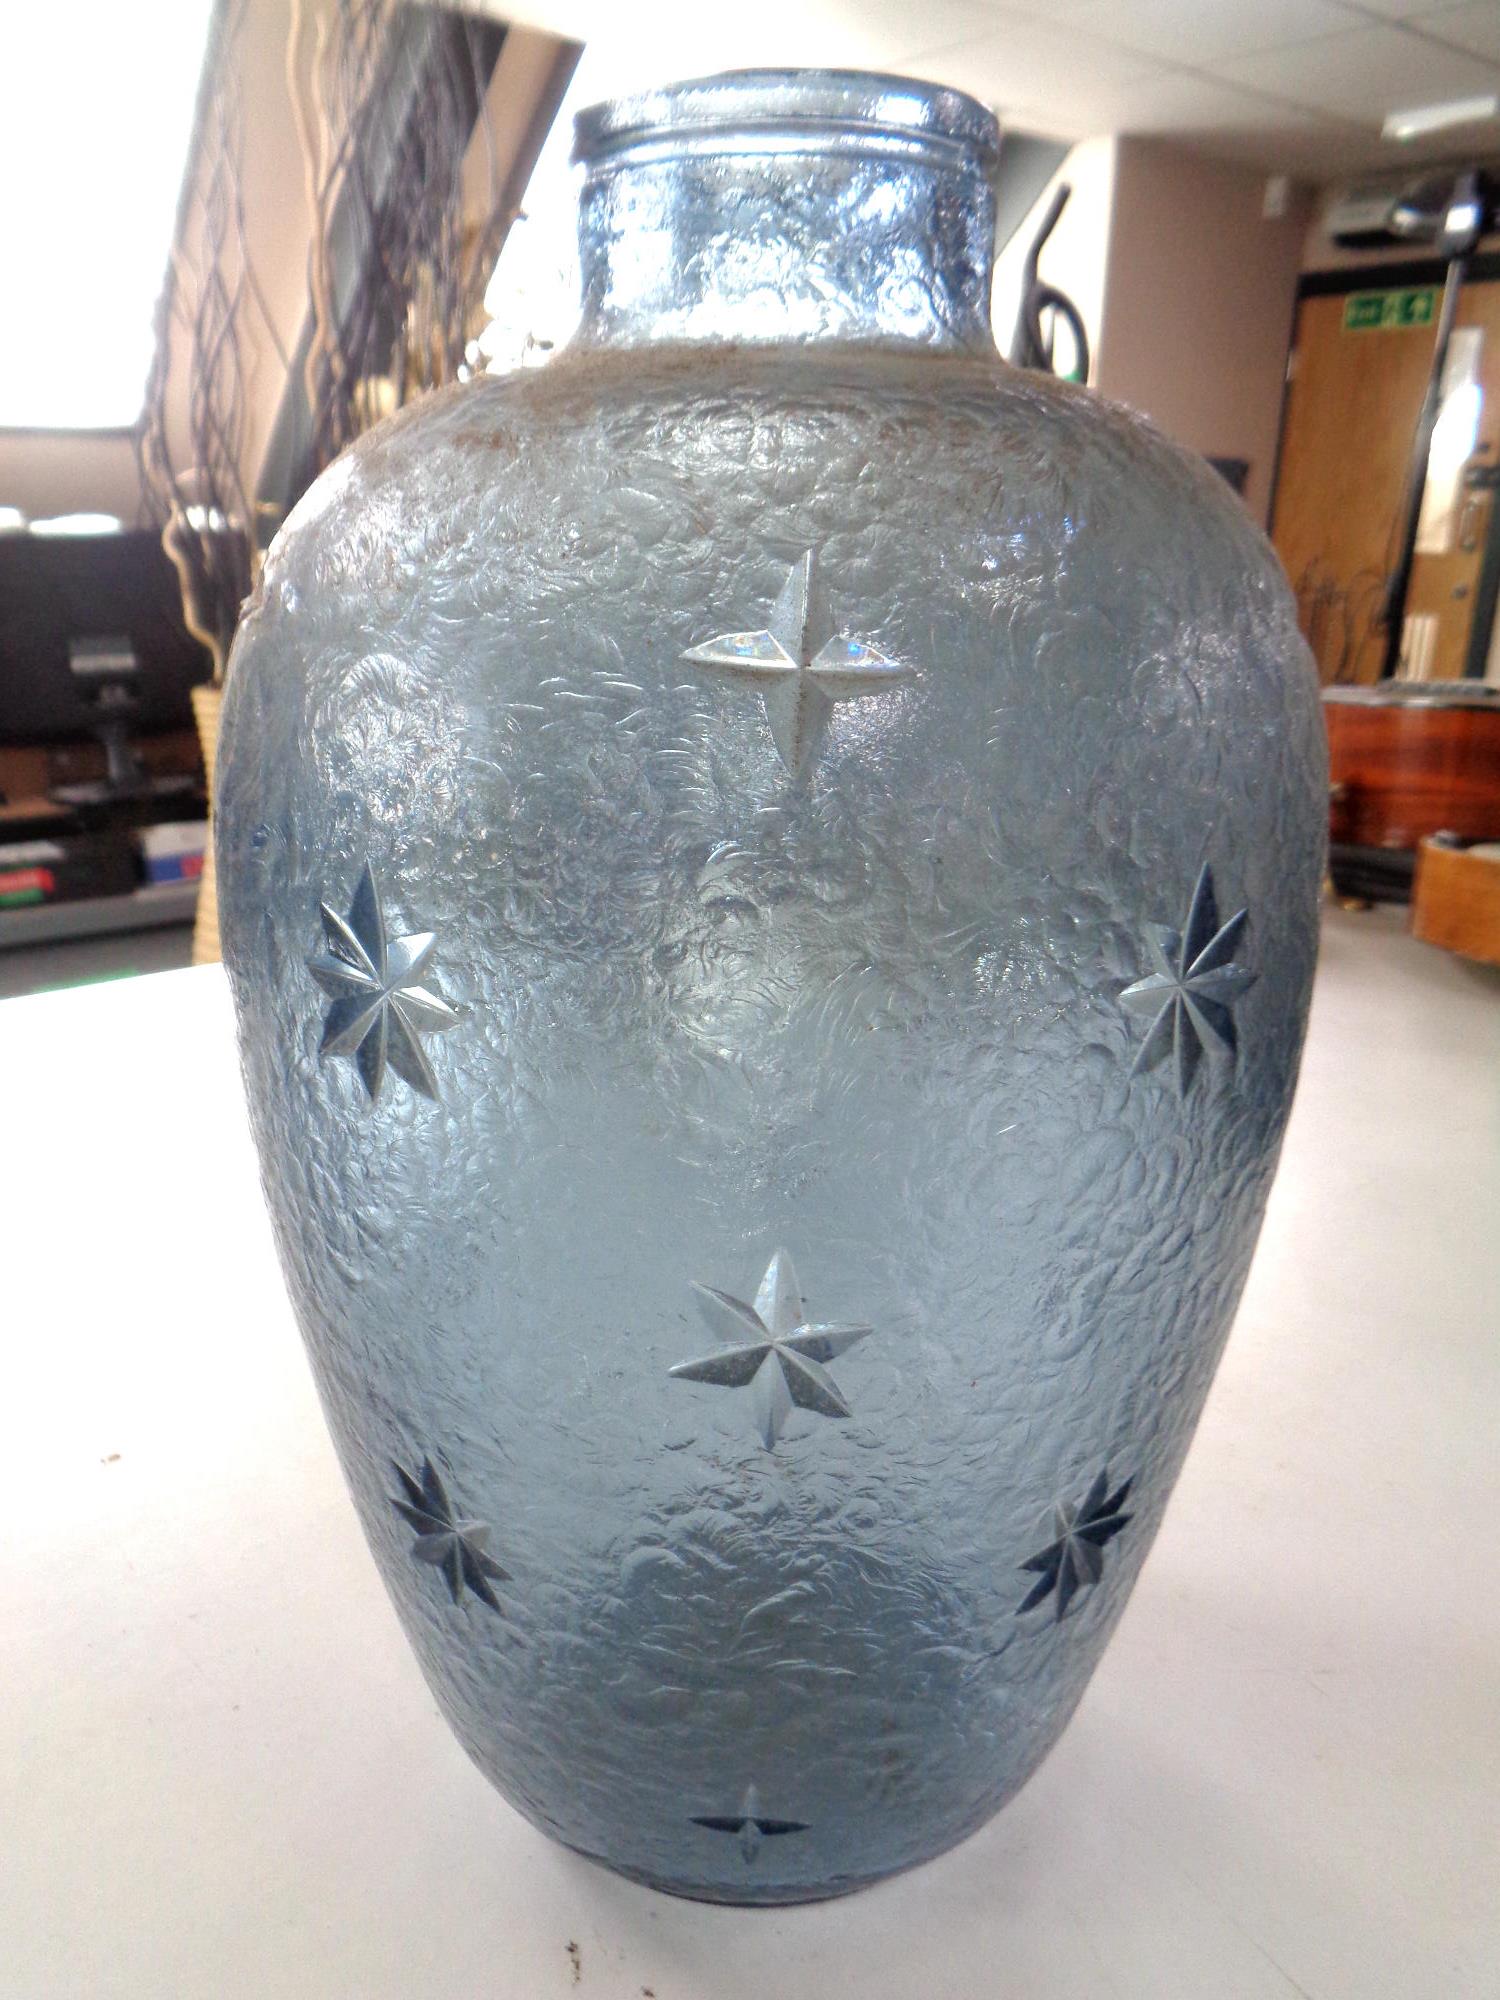 A textured blue glass vase